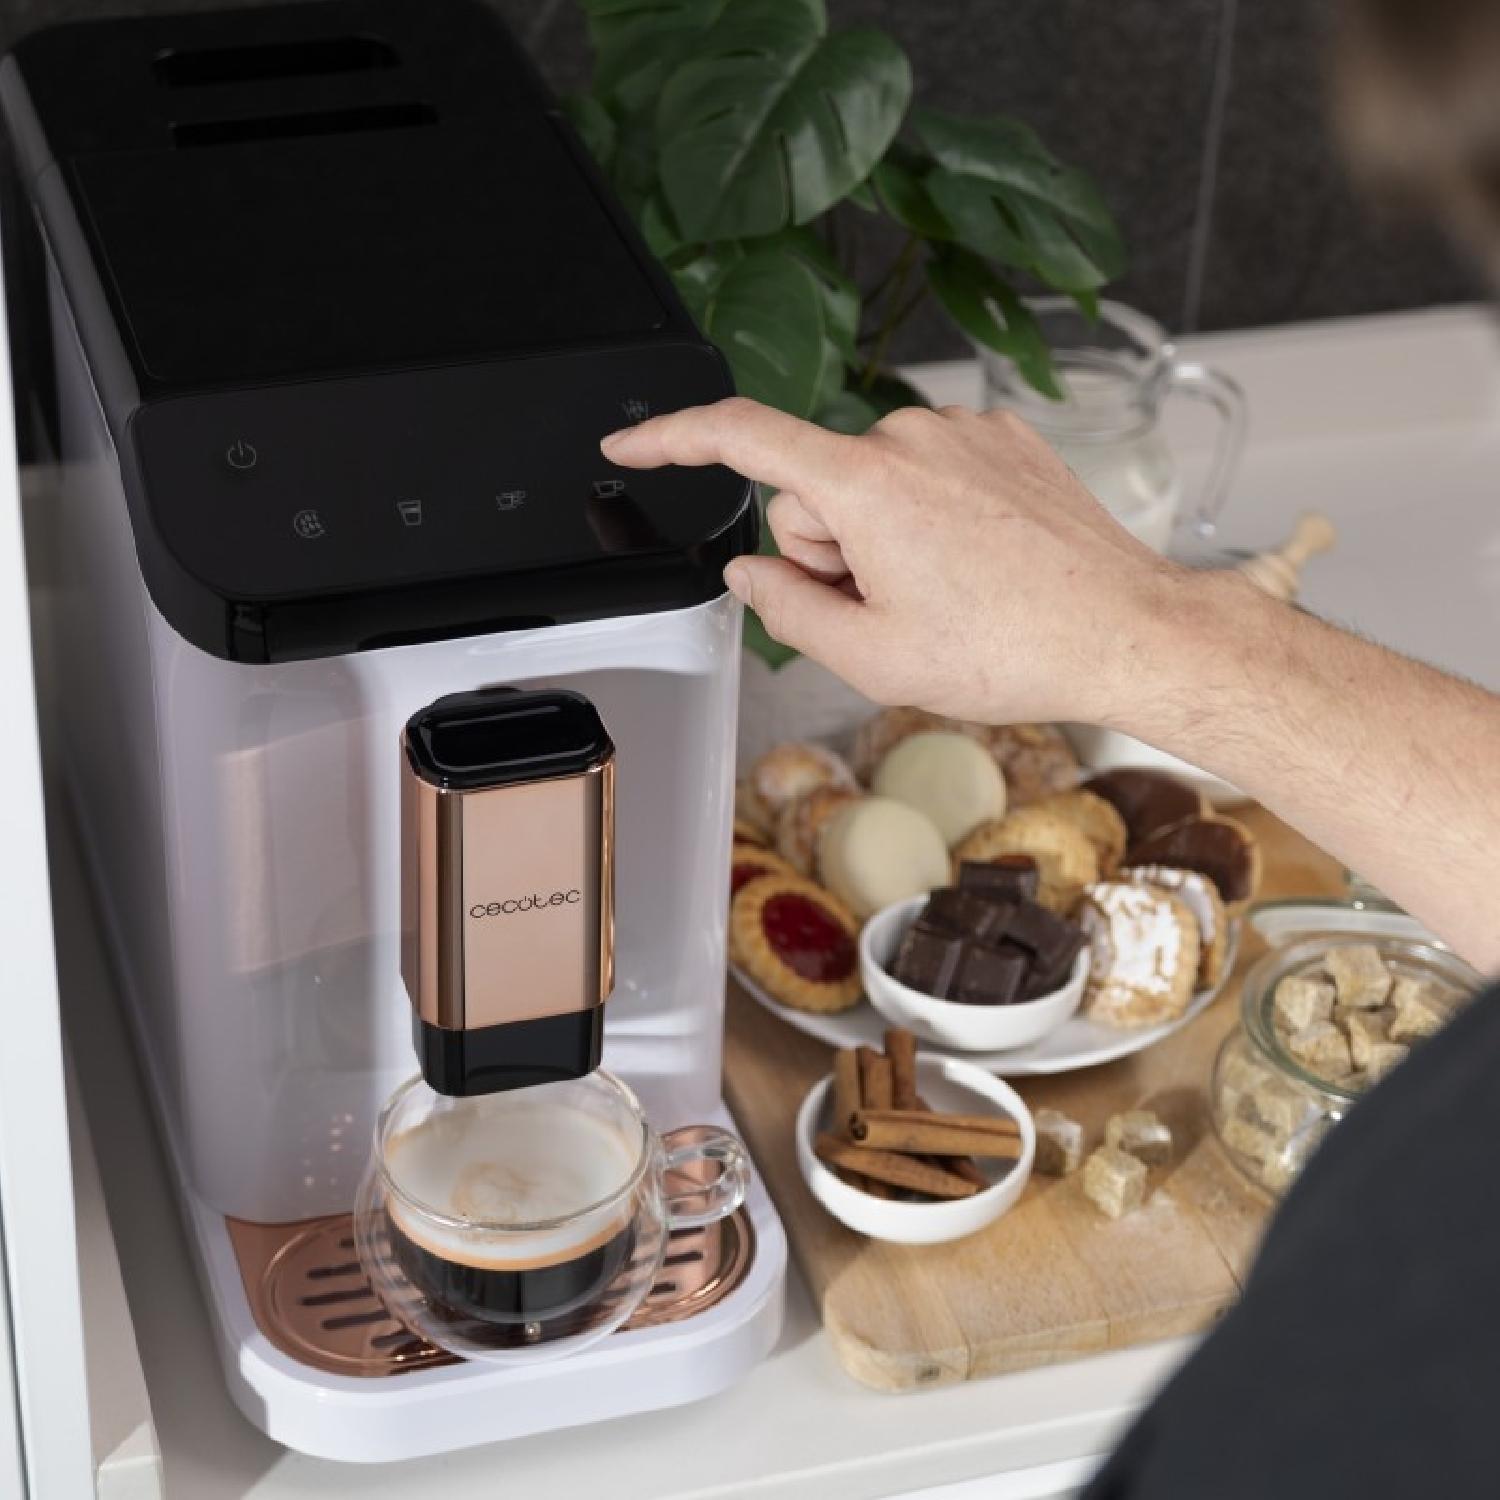 Macchine del caffè superautomatiche Cremmaet Macchia White Rose Cecotec